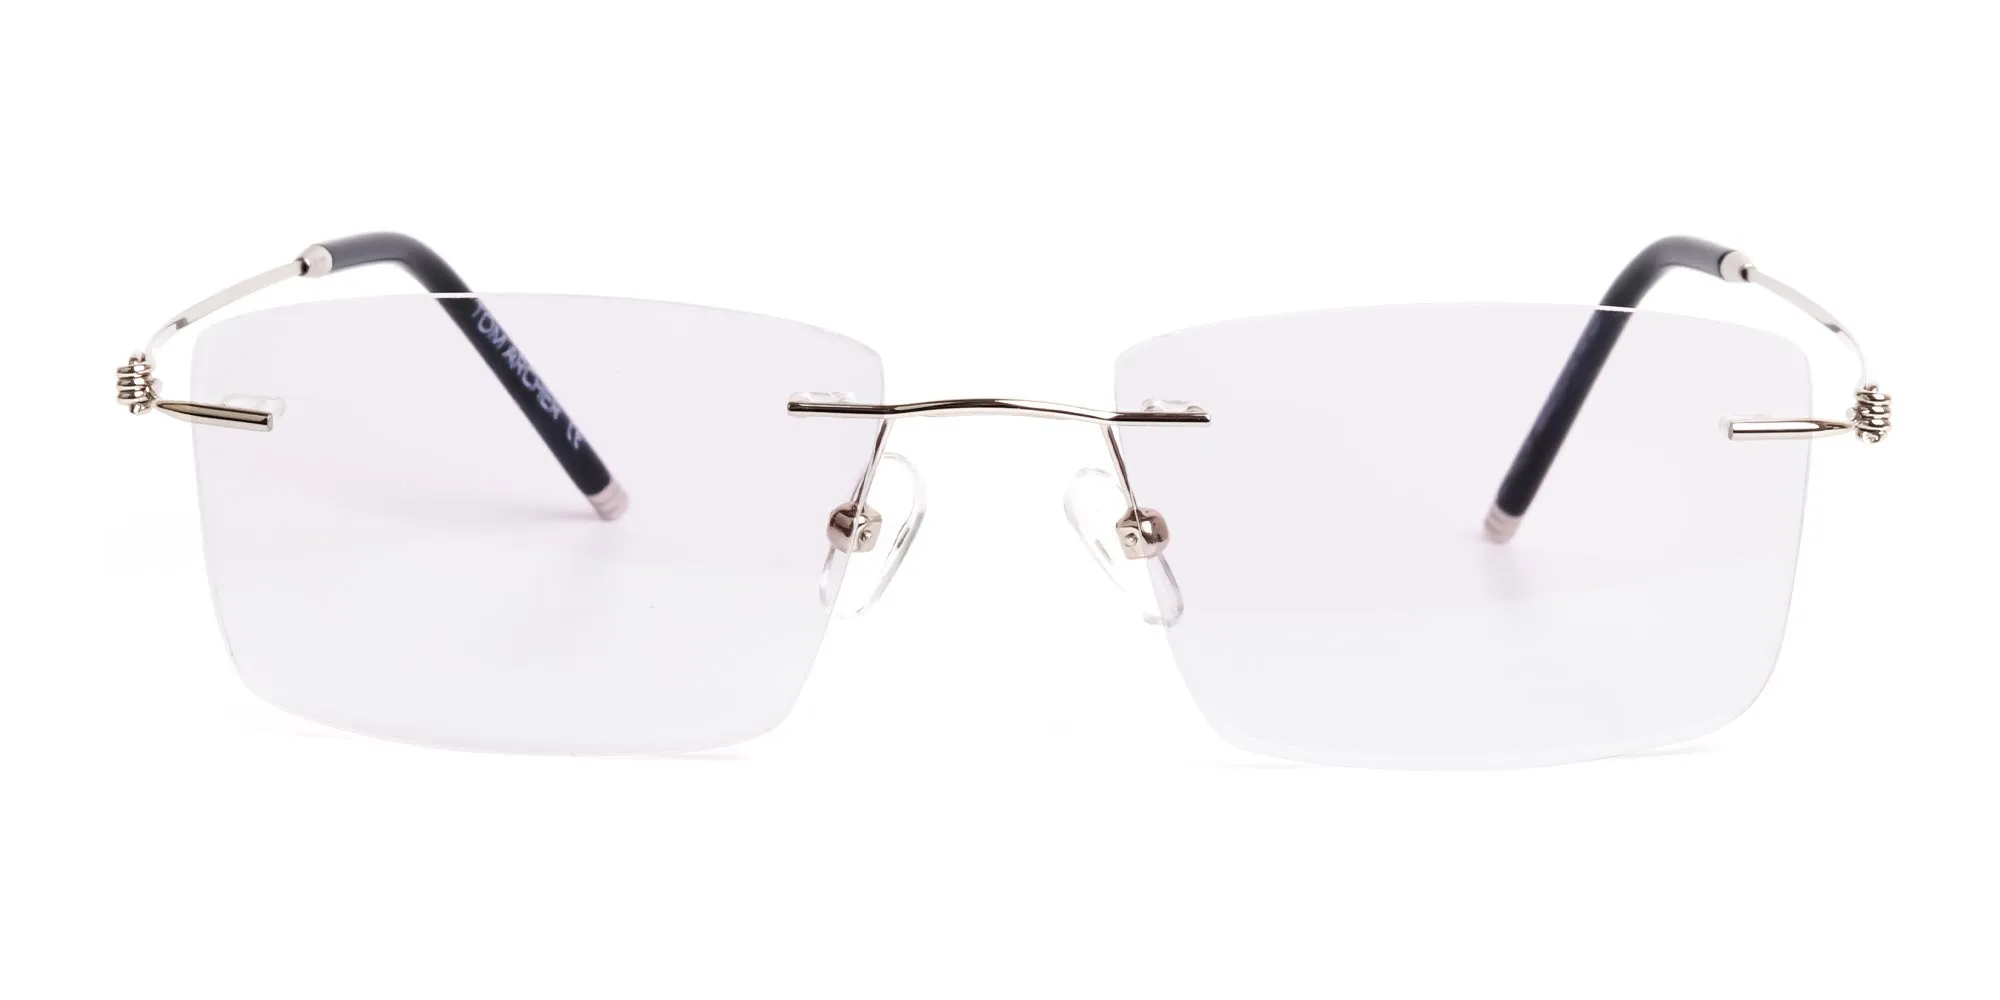 silver rectangular rimless titanium glasses frames-2